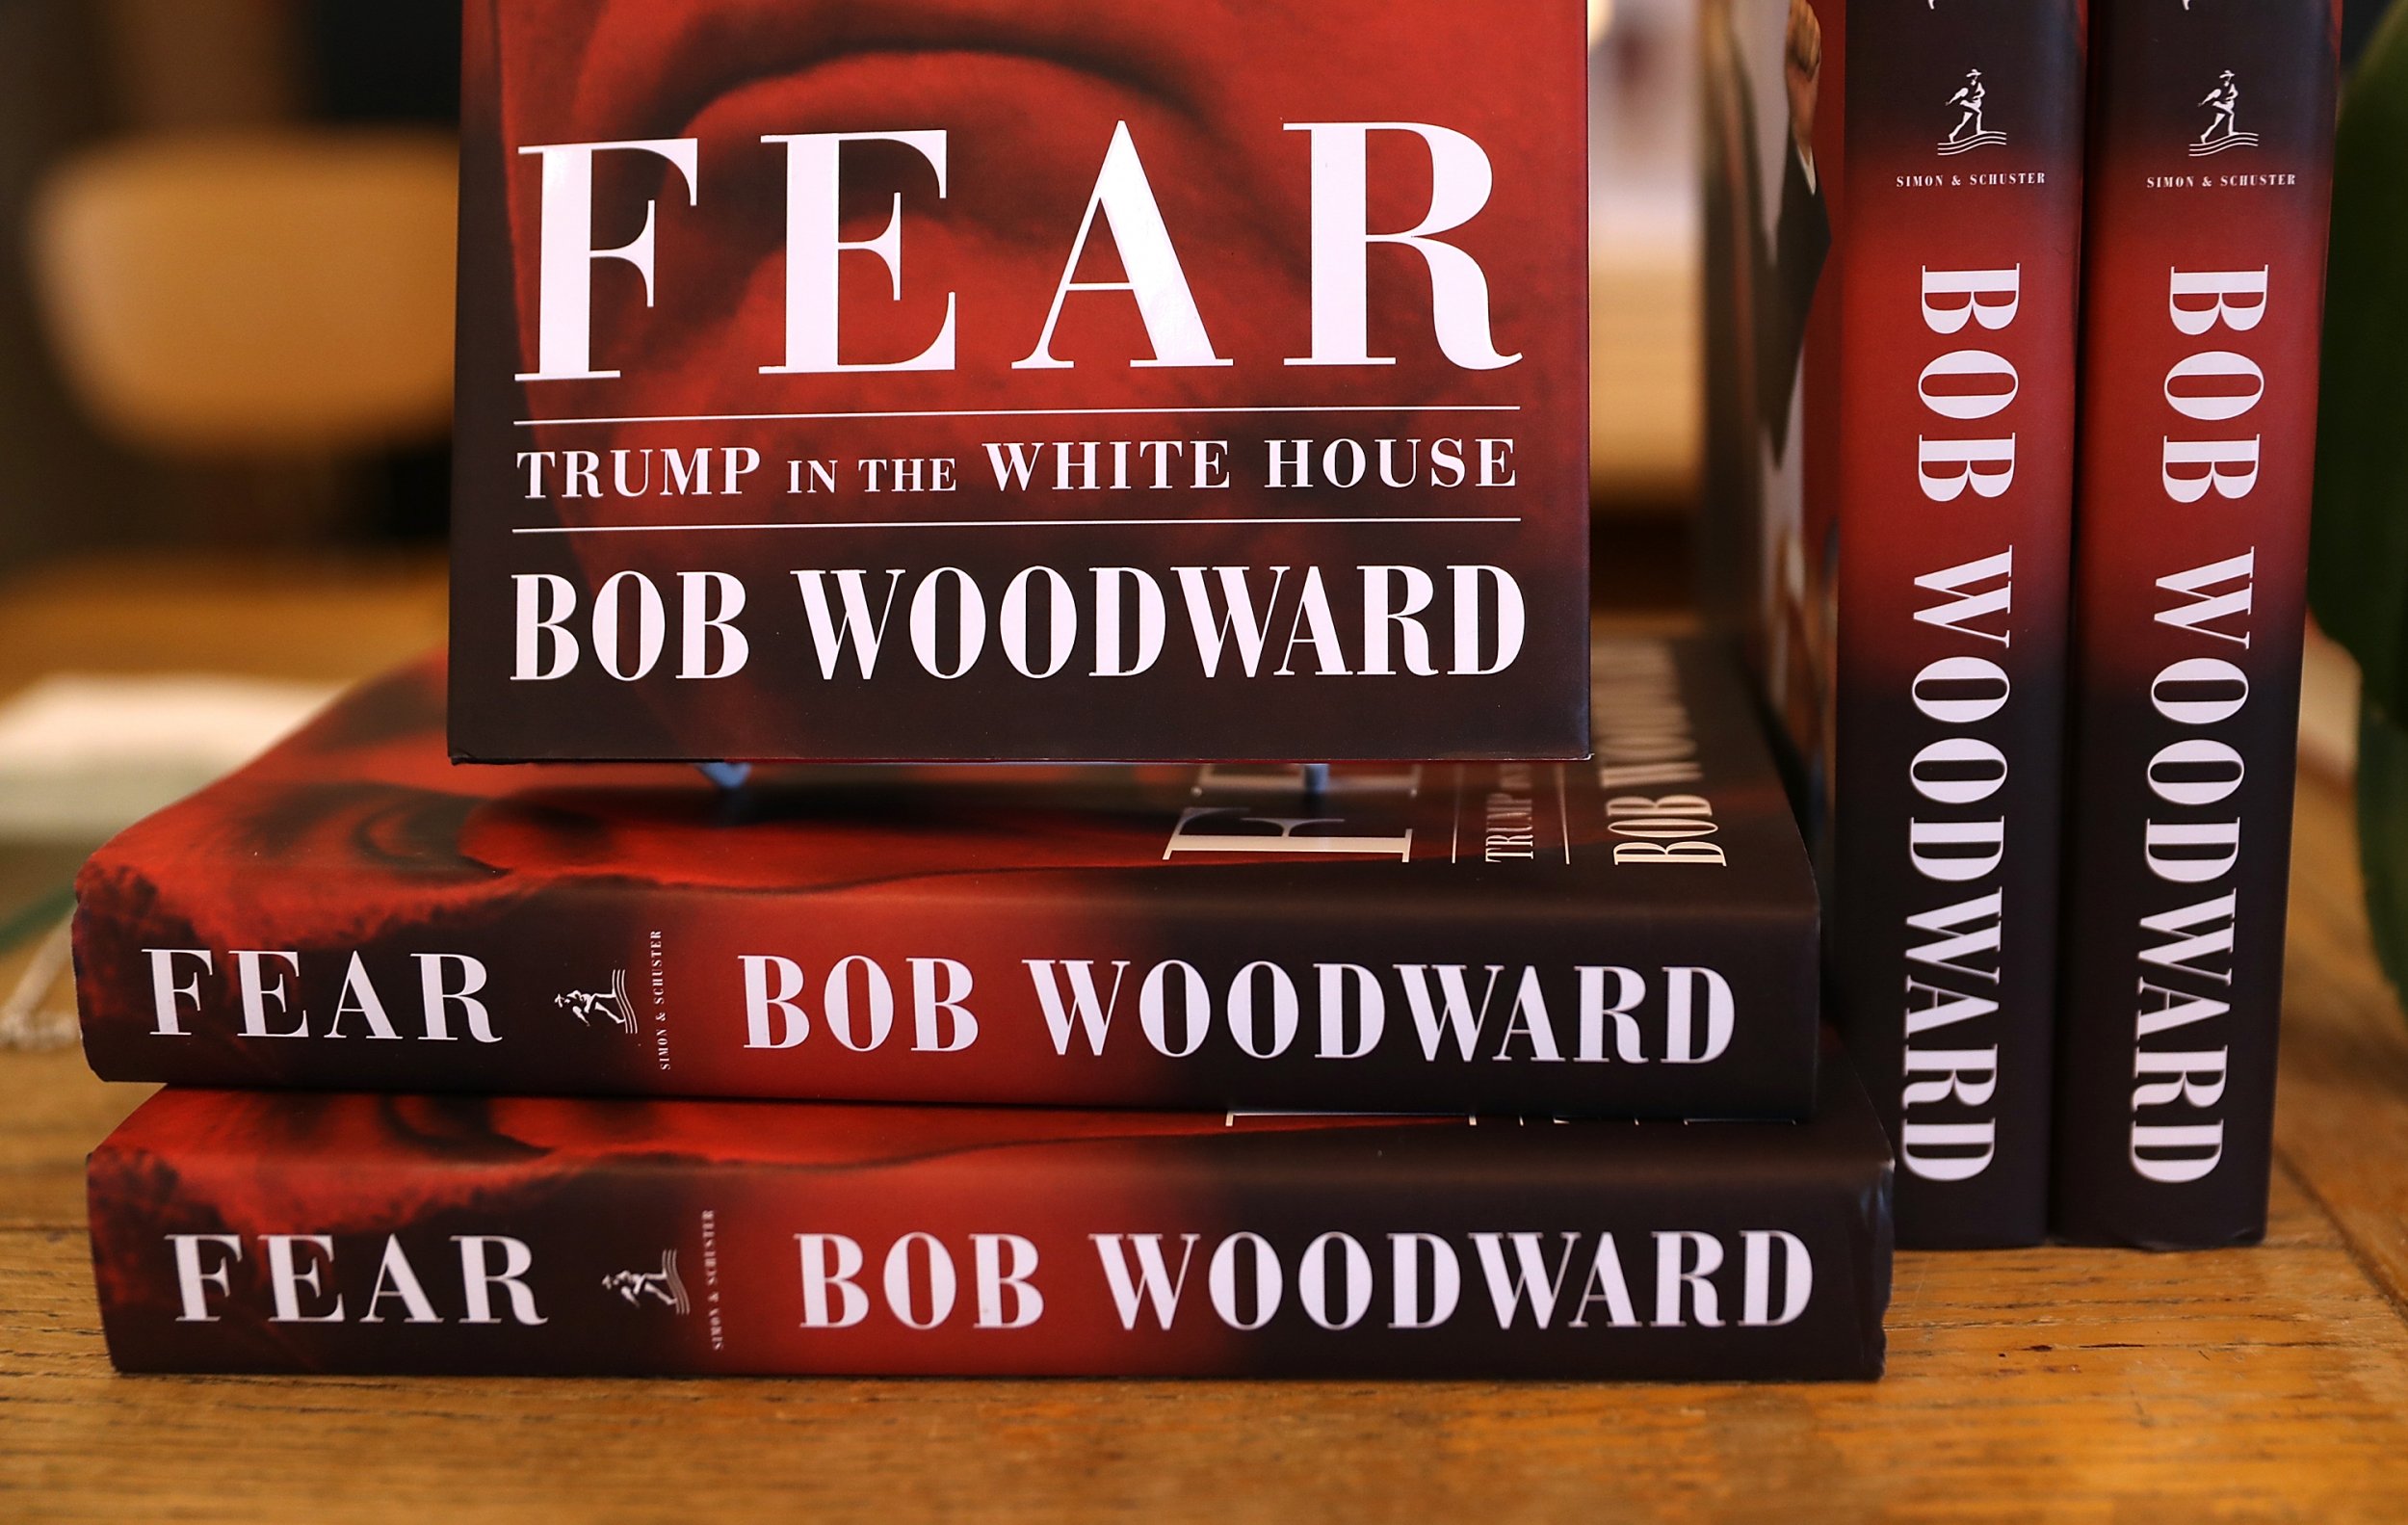 woodward book fear